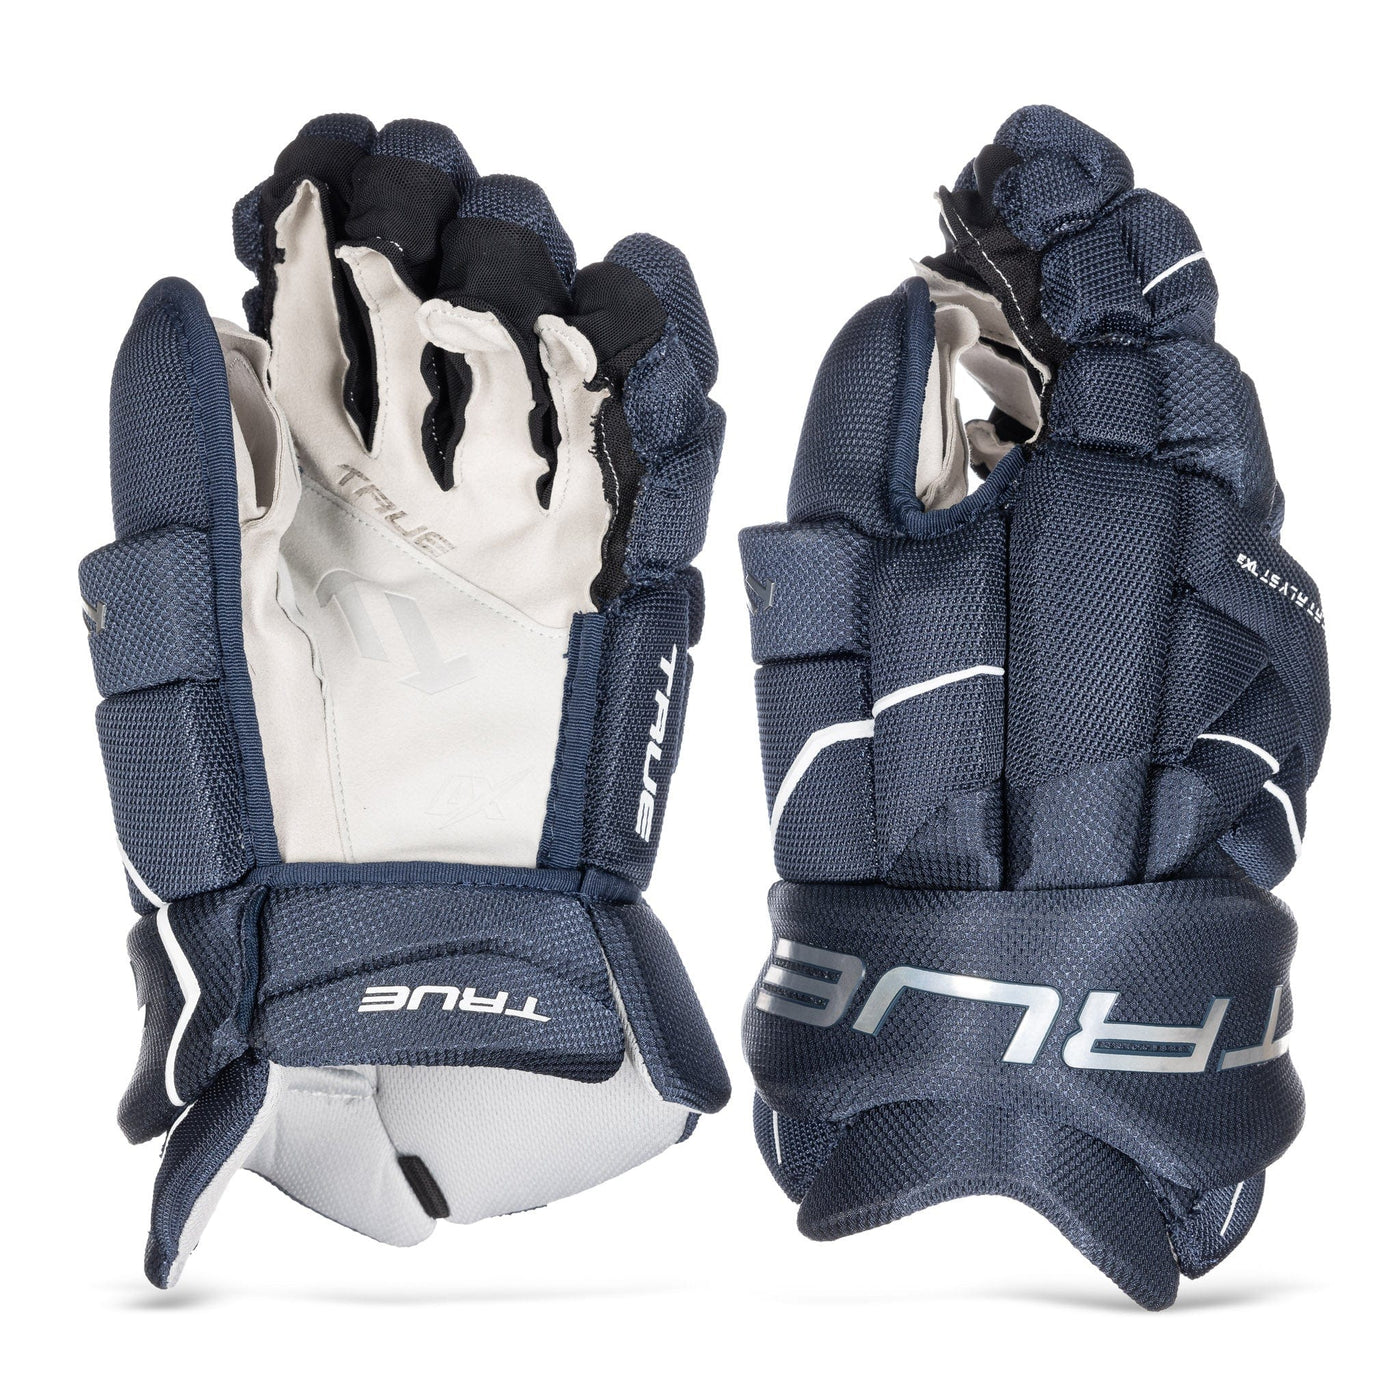 TRUE Catalyst 7X3 Junior Hockey Glove - The Hockey Shop Source For Sports